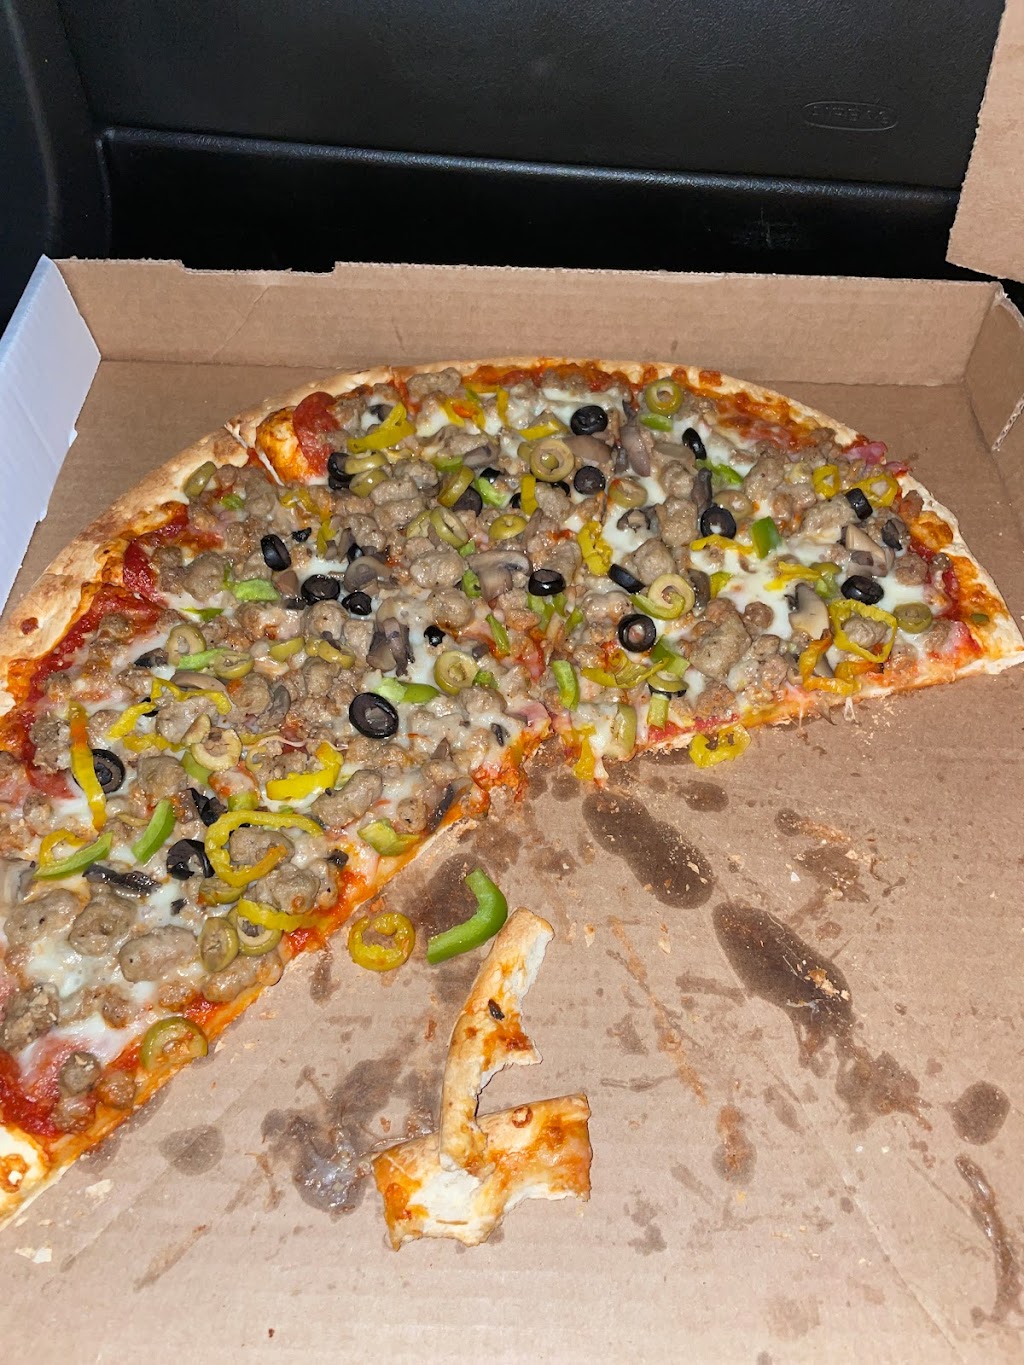 Daves Pizza | 2057 LA-10, Jackson, LA 70748, USA | Phone: (225) 634-5718